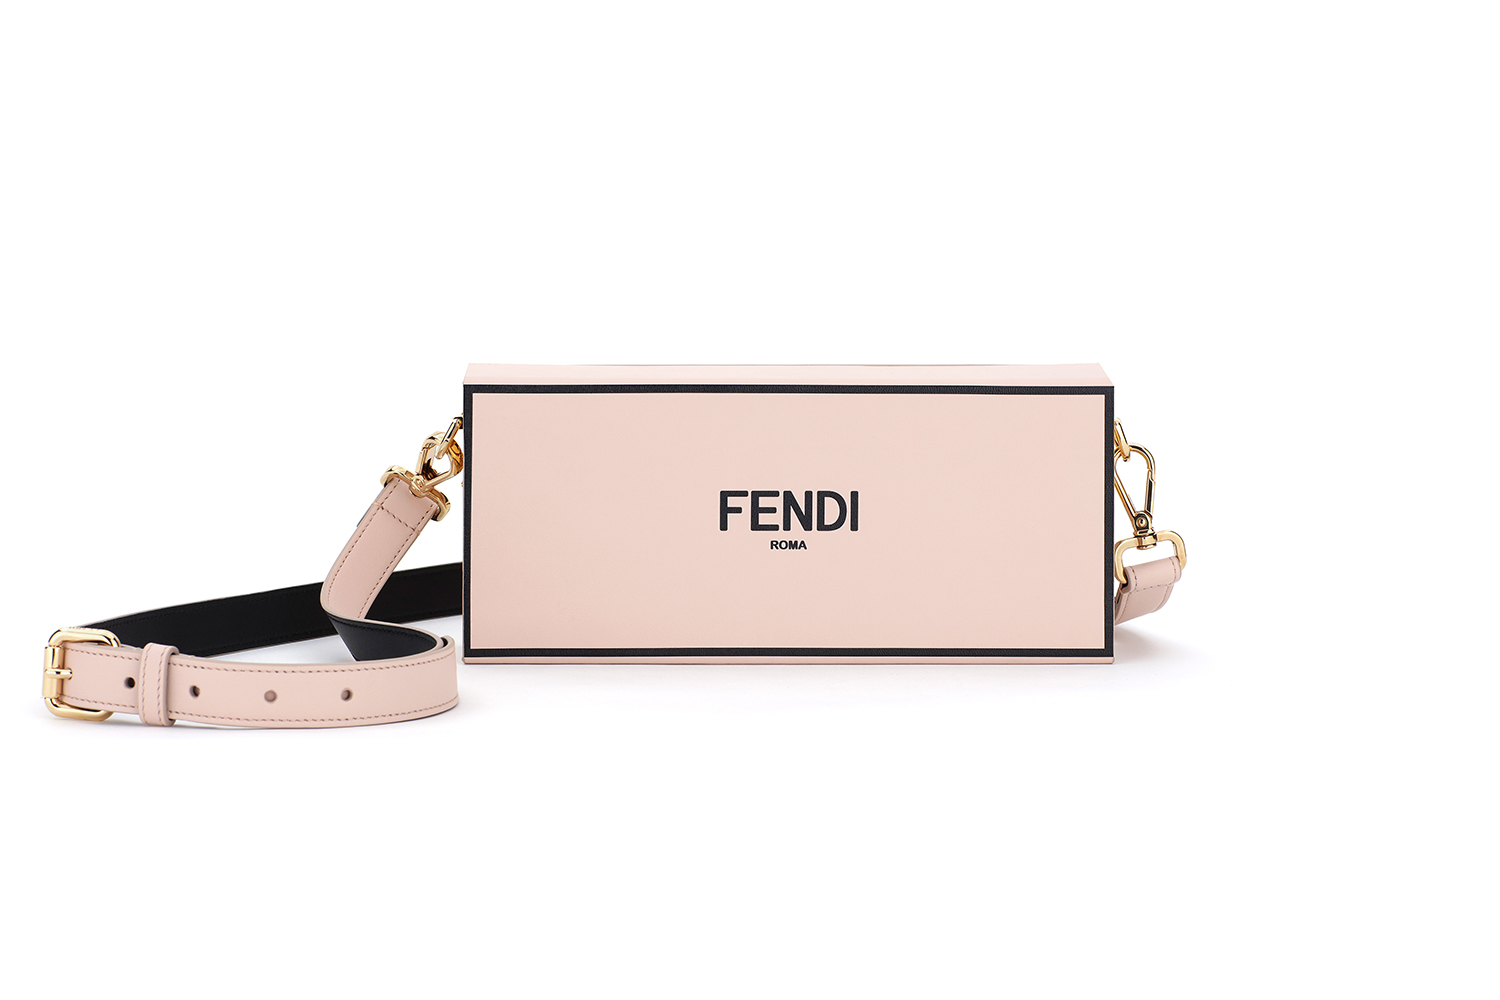 FENDIの新作アクセサリーコレクション『FENDI PACK』